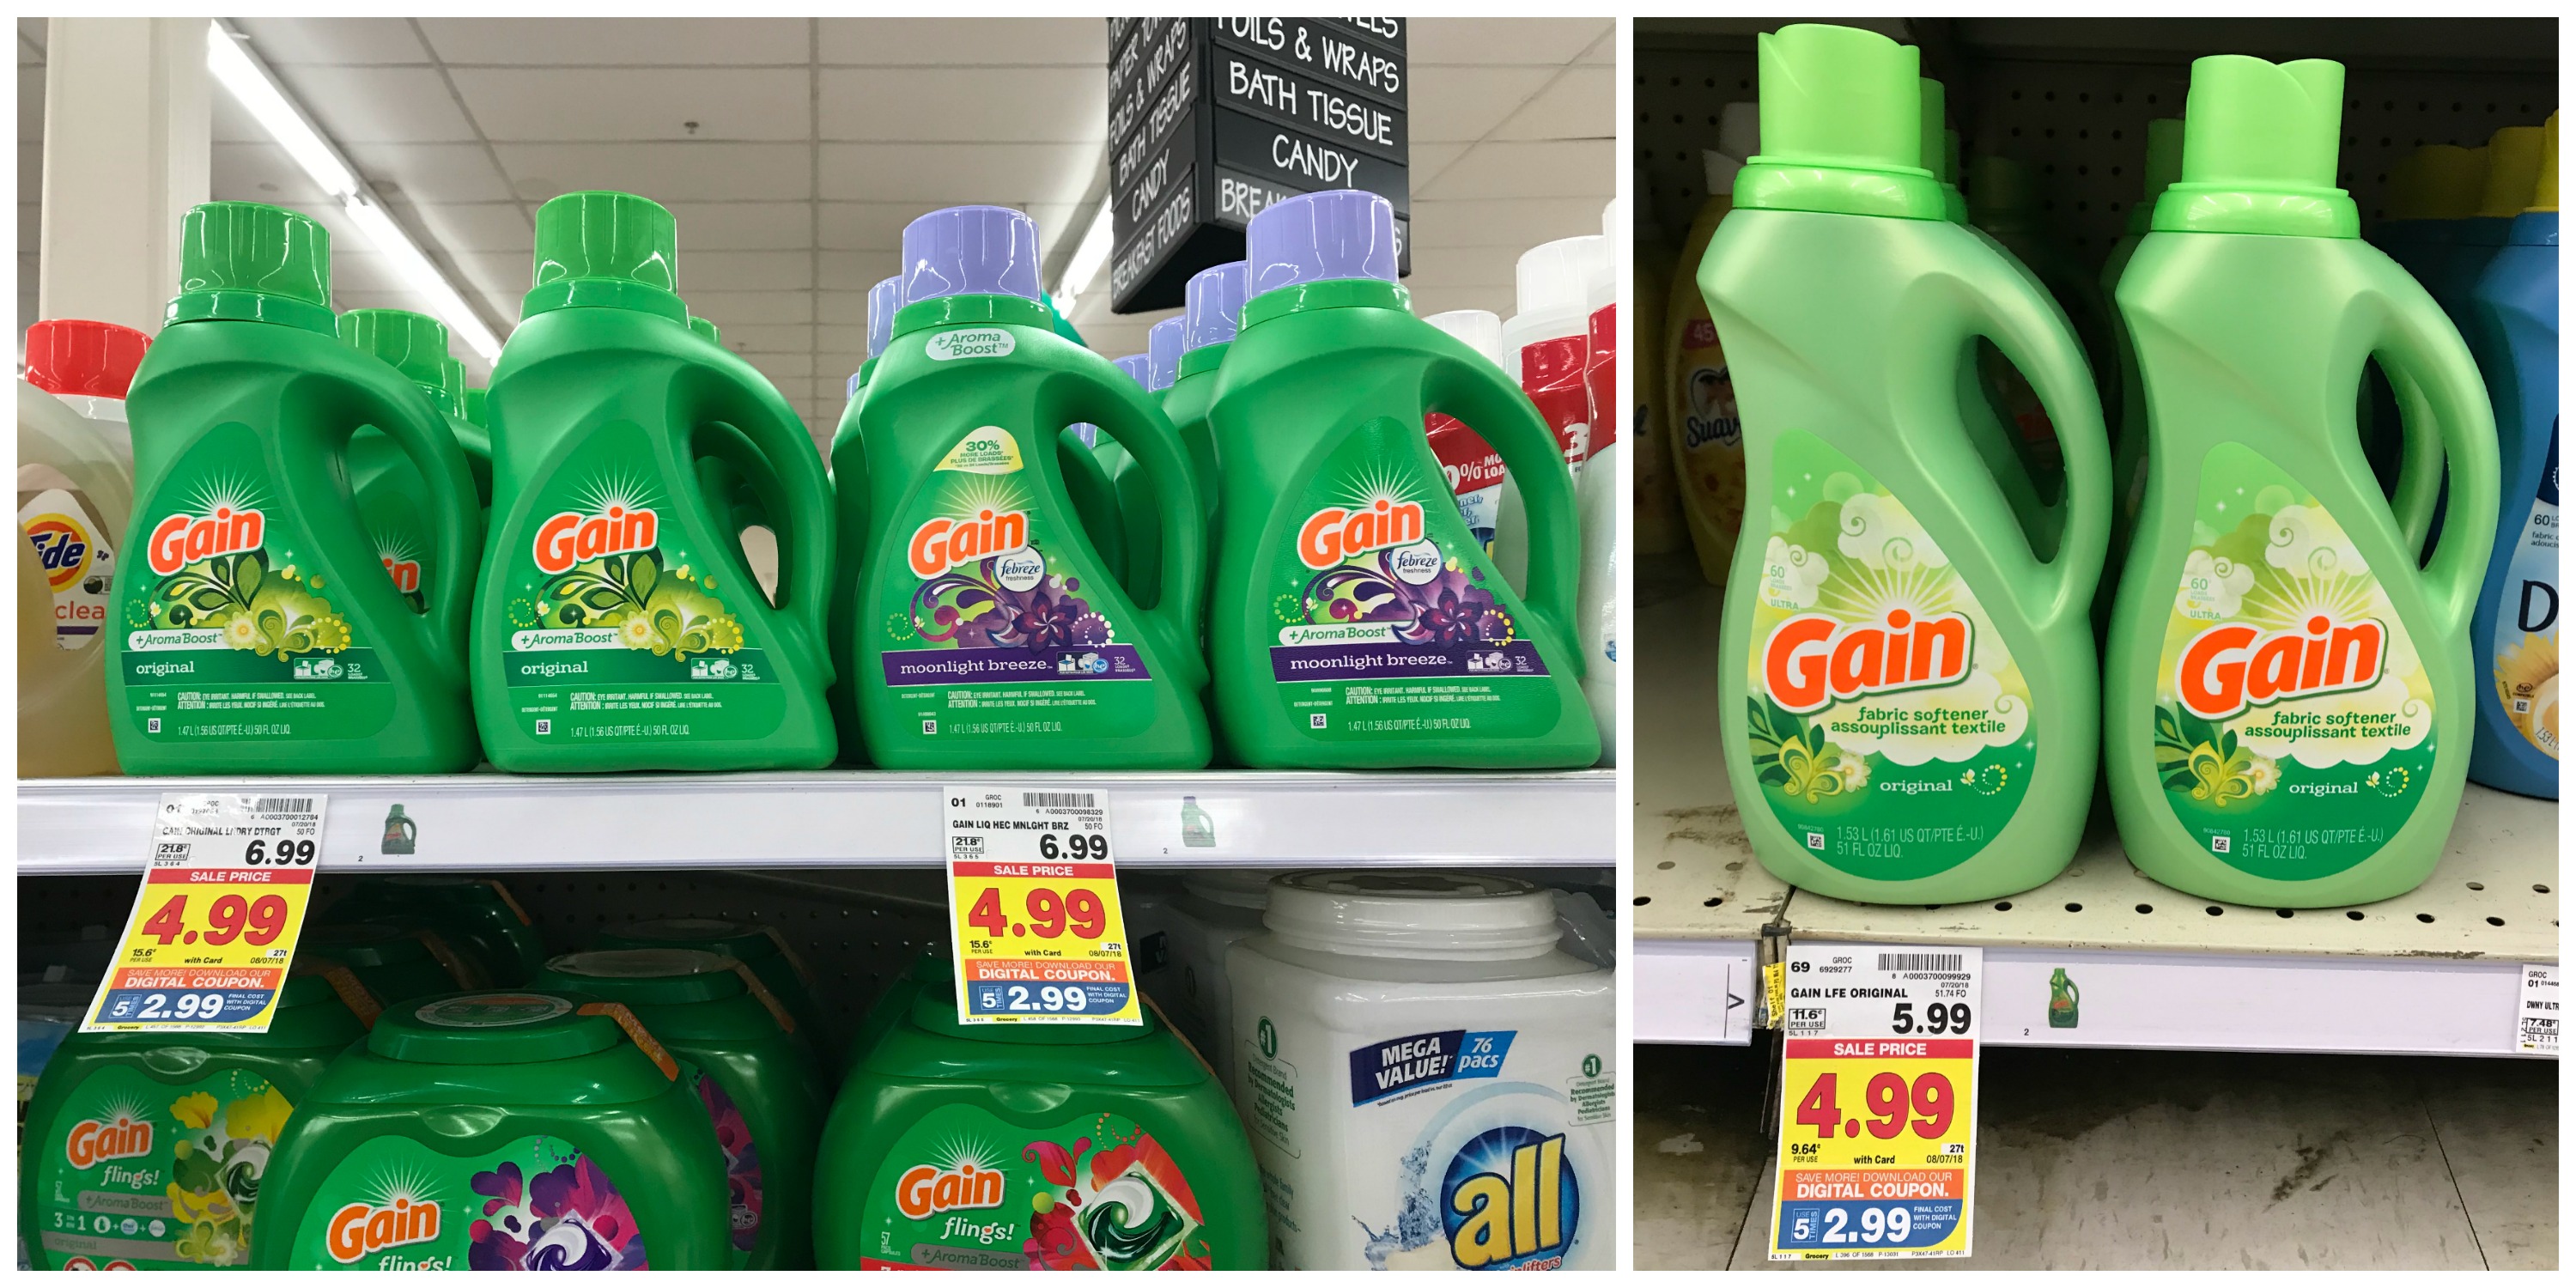 https://www.krogerkrazy.com/wp-content/uploads/2018/07/gain-detergent-or-softener-Collage.jpg